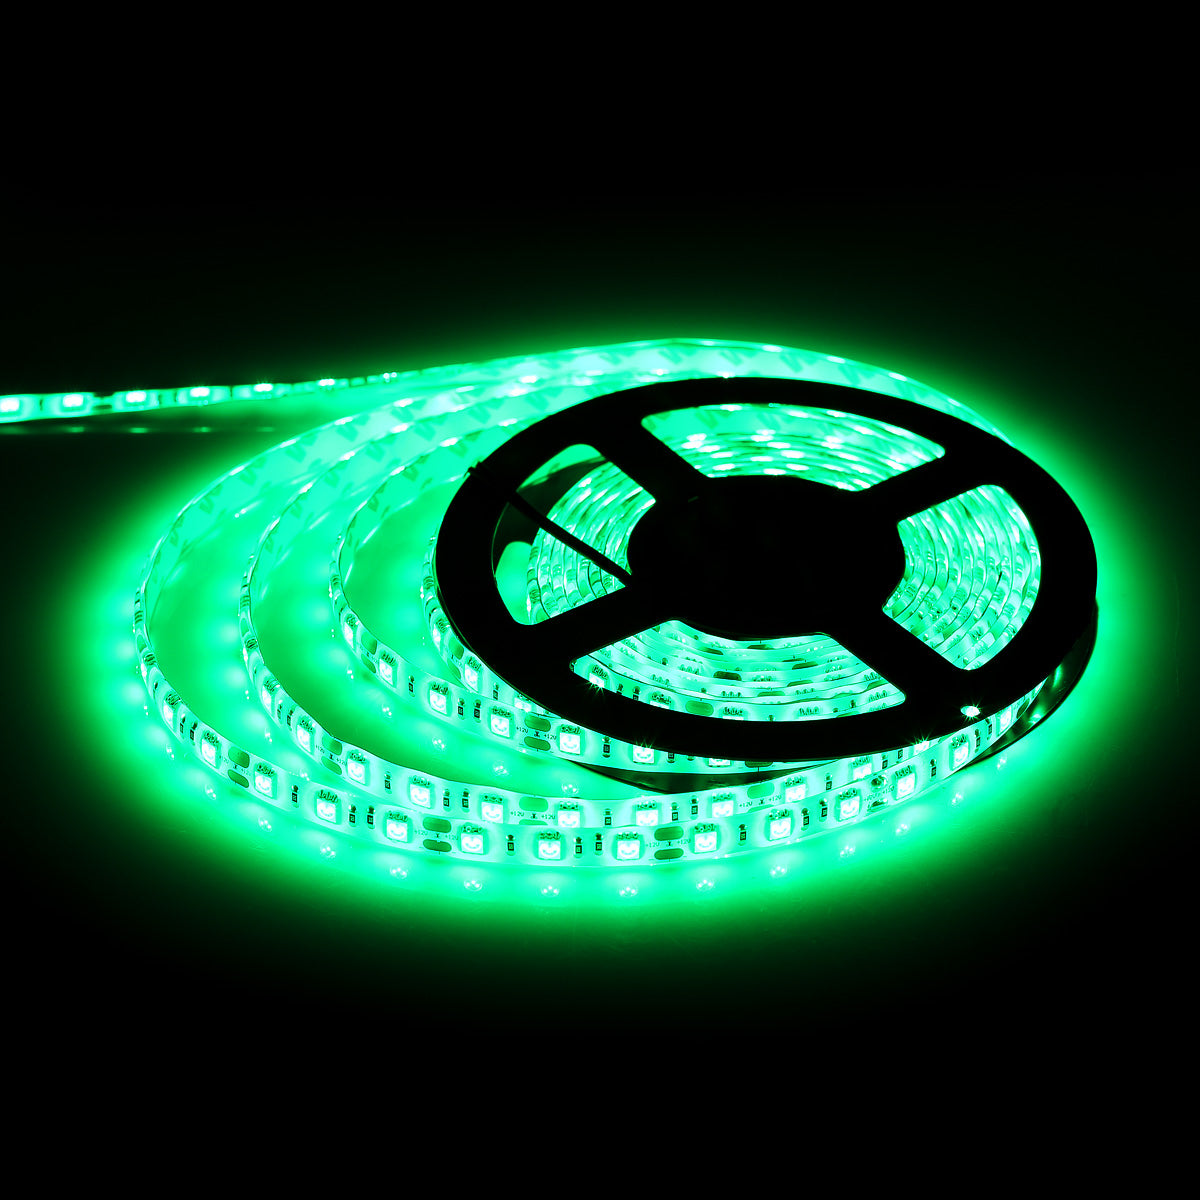 SUPERNIGHT Green LED Strip Light, 16.4ft 5050 SMD 300led Rope Lights, IP65 Waterproof Lighting